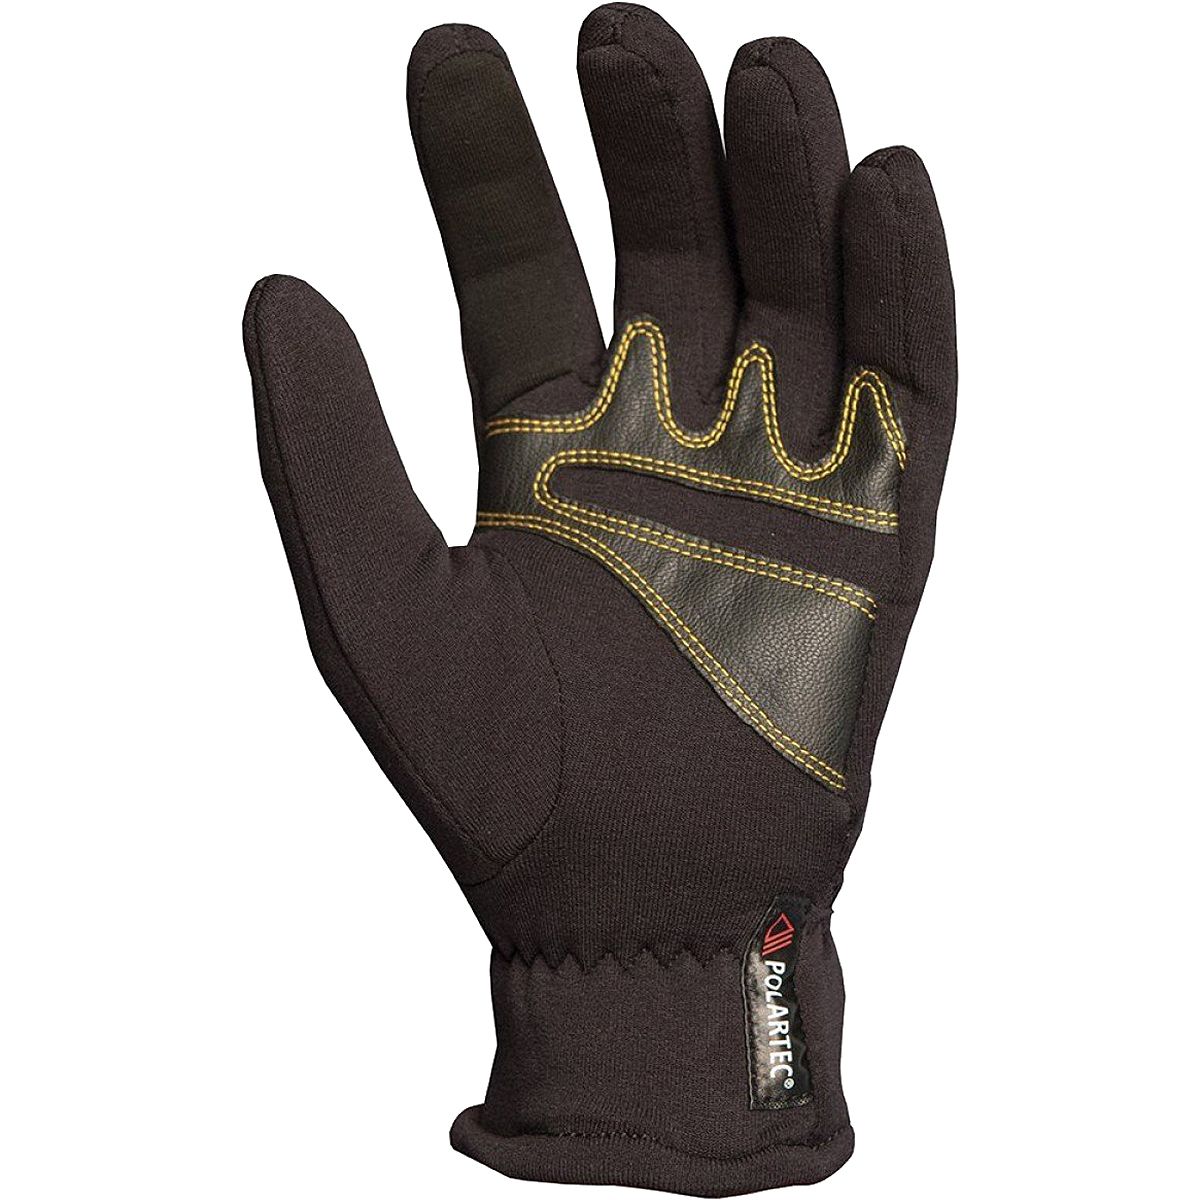  La Sportiva Stretch Glove - Accessories